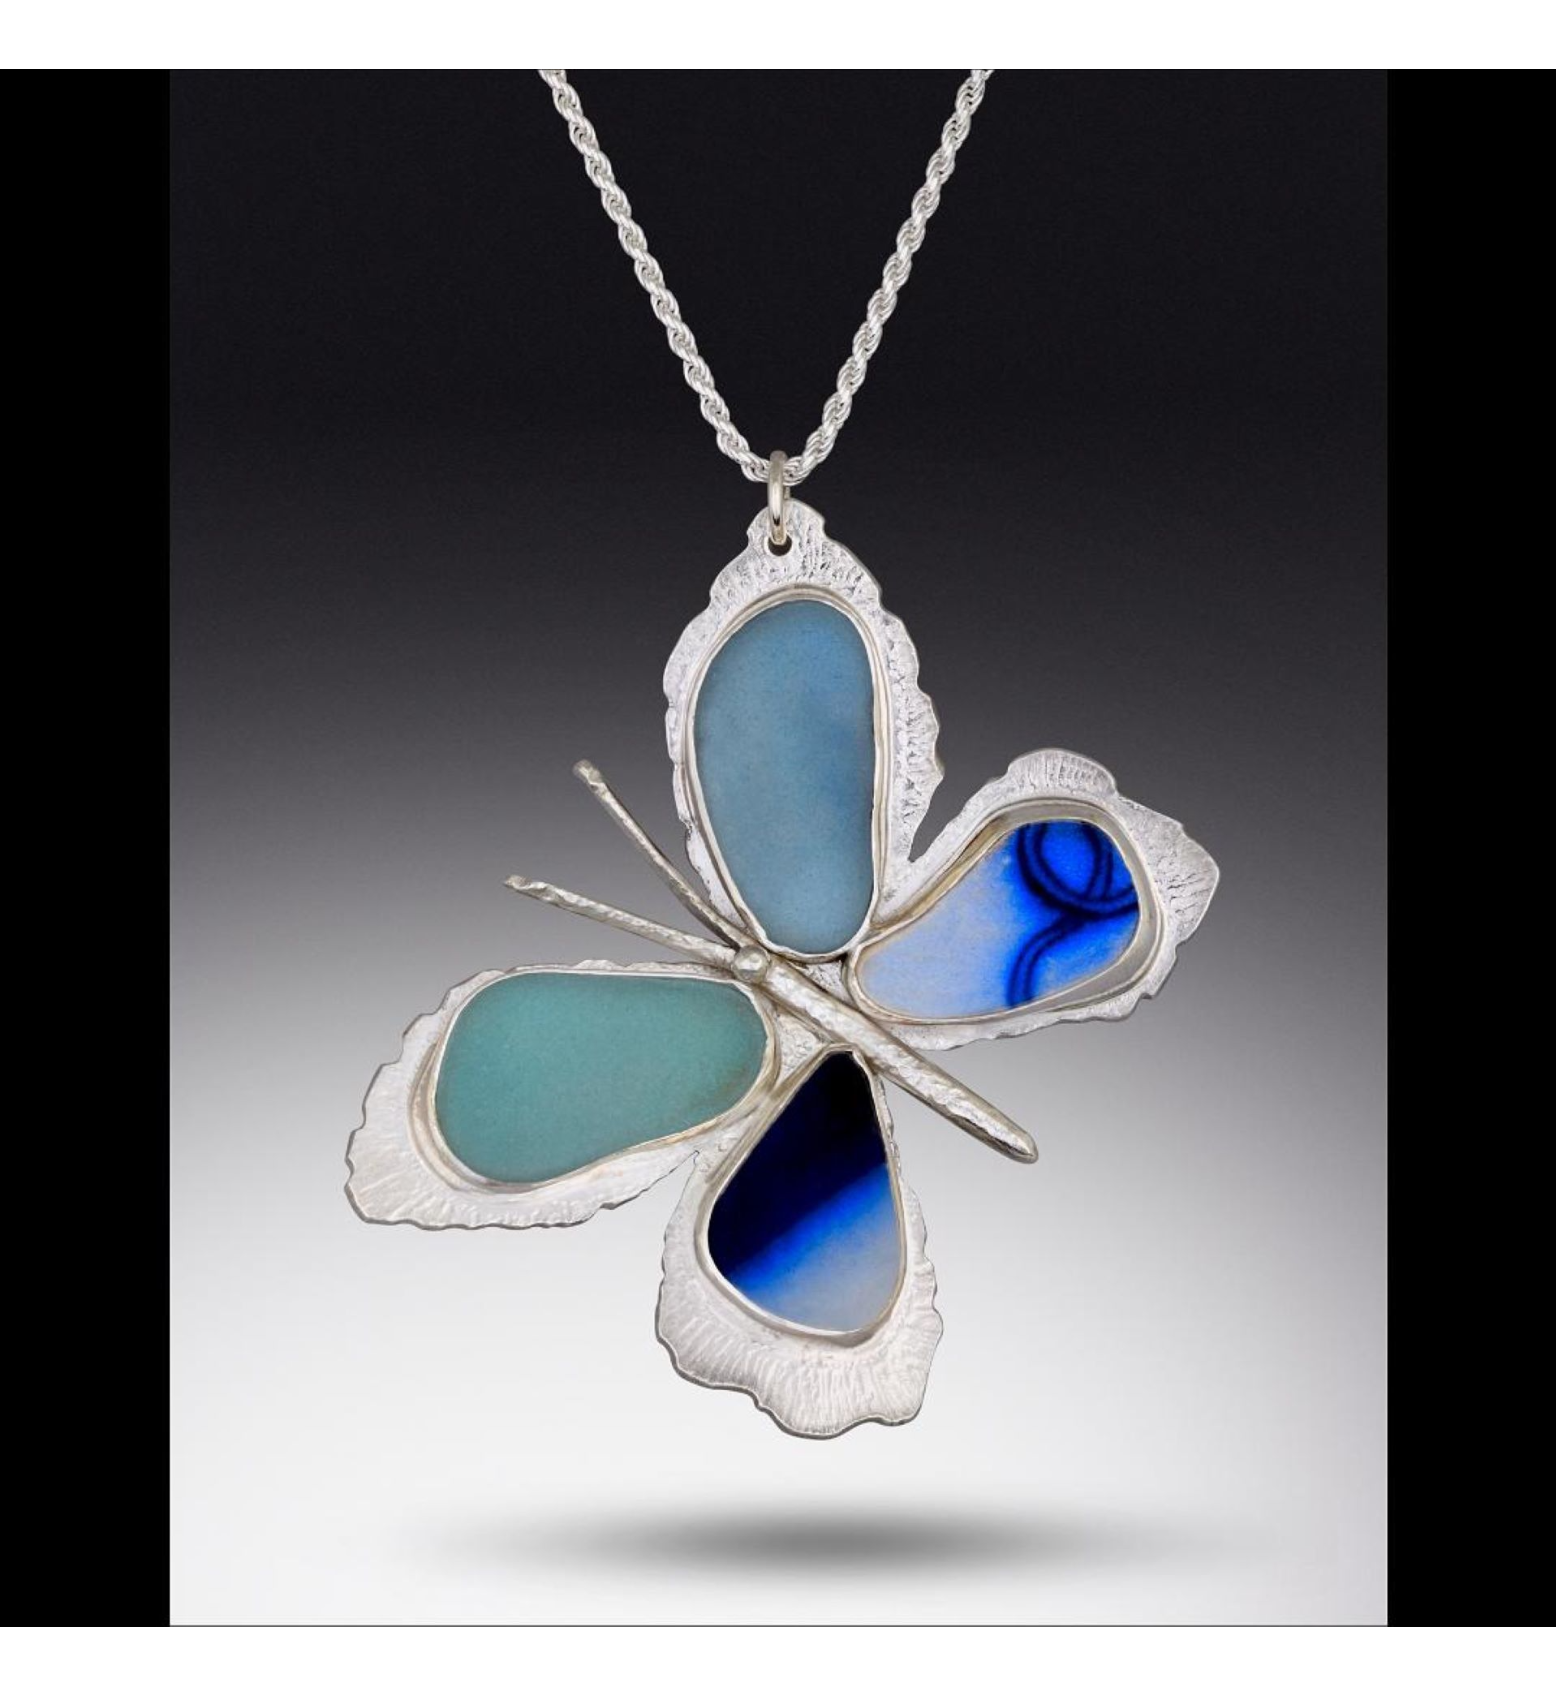 Sandpiper Sea Glass Jewelry - Christine Oaks#Booth 61